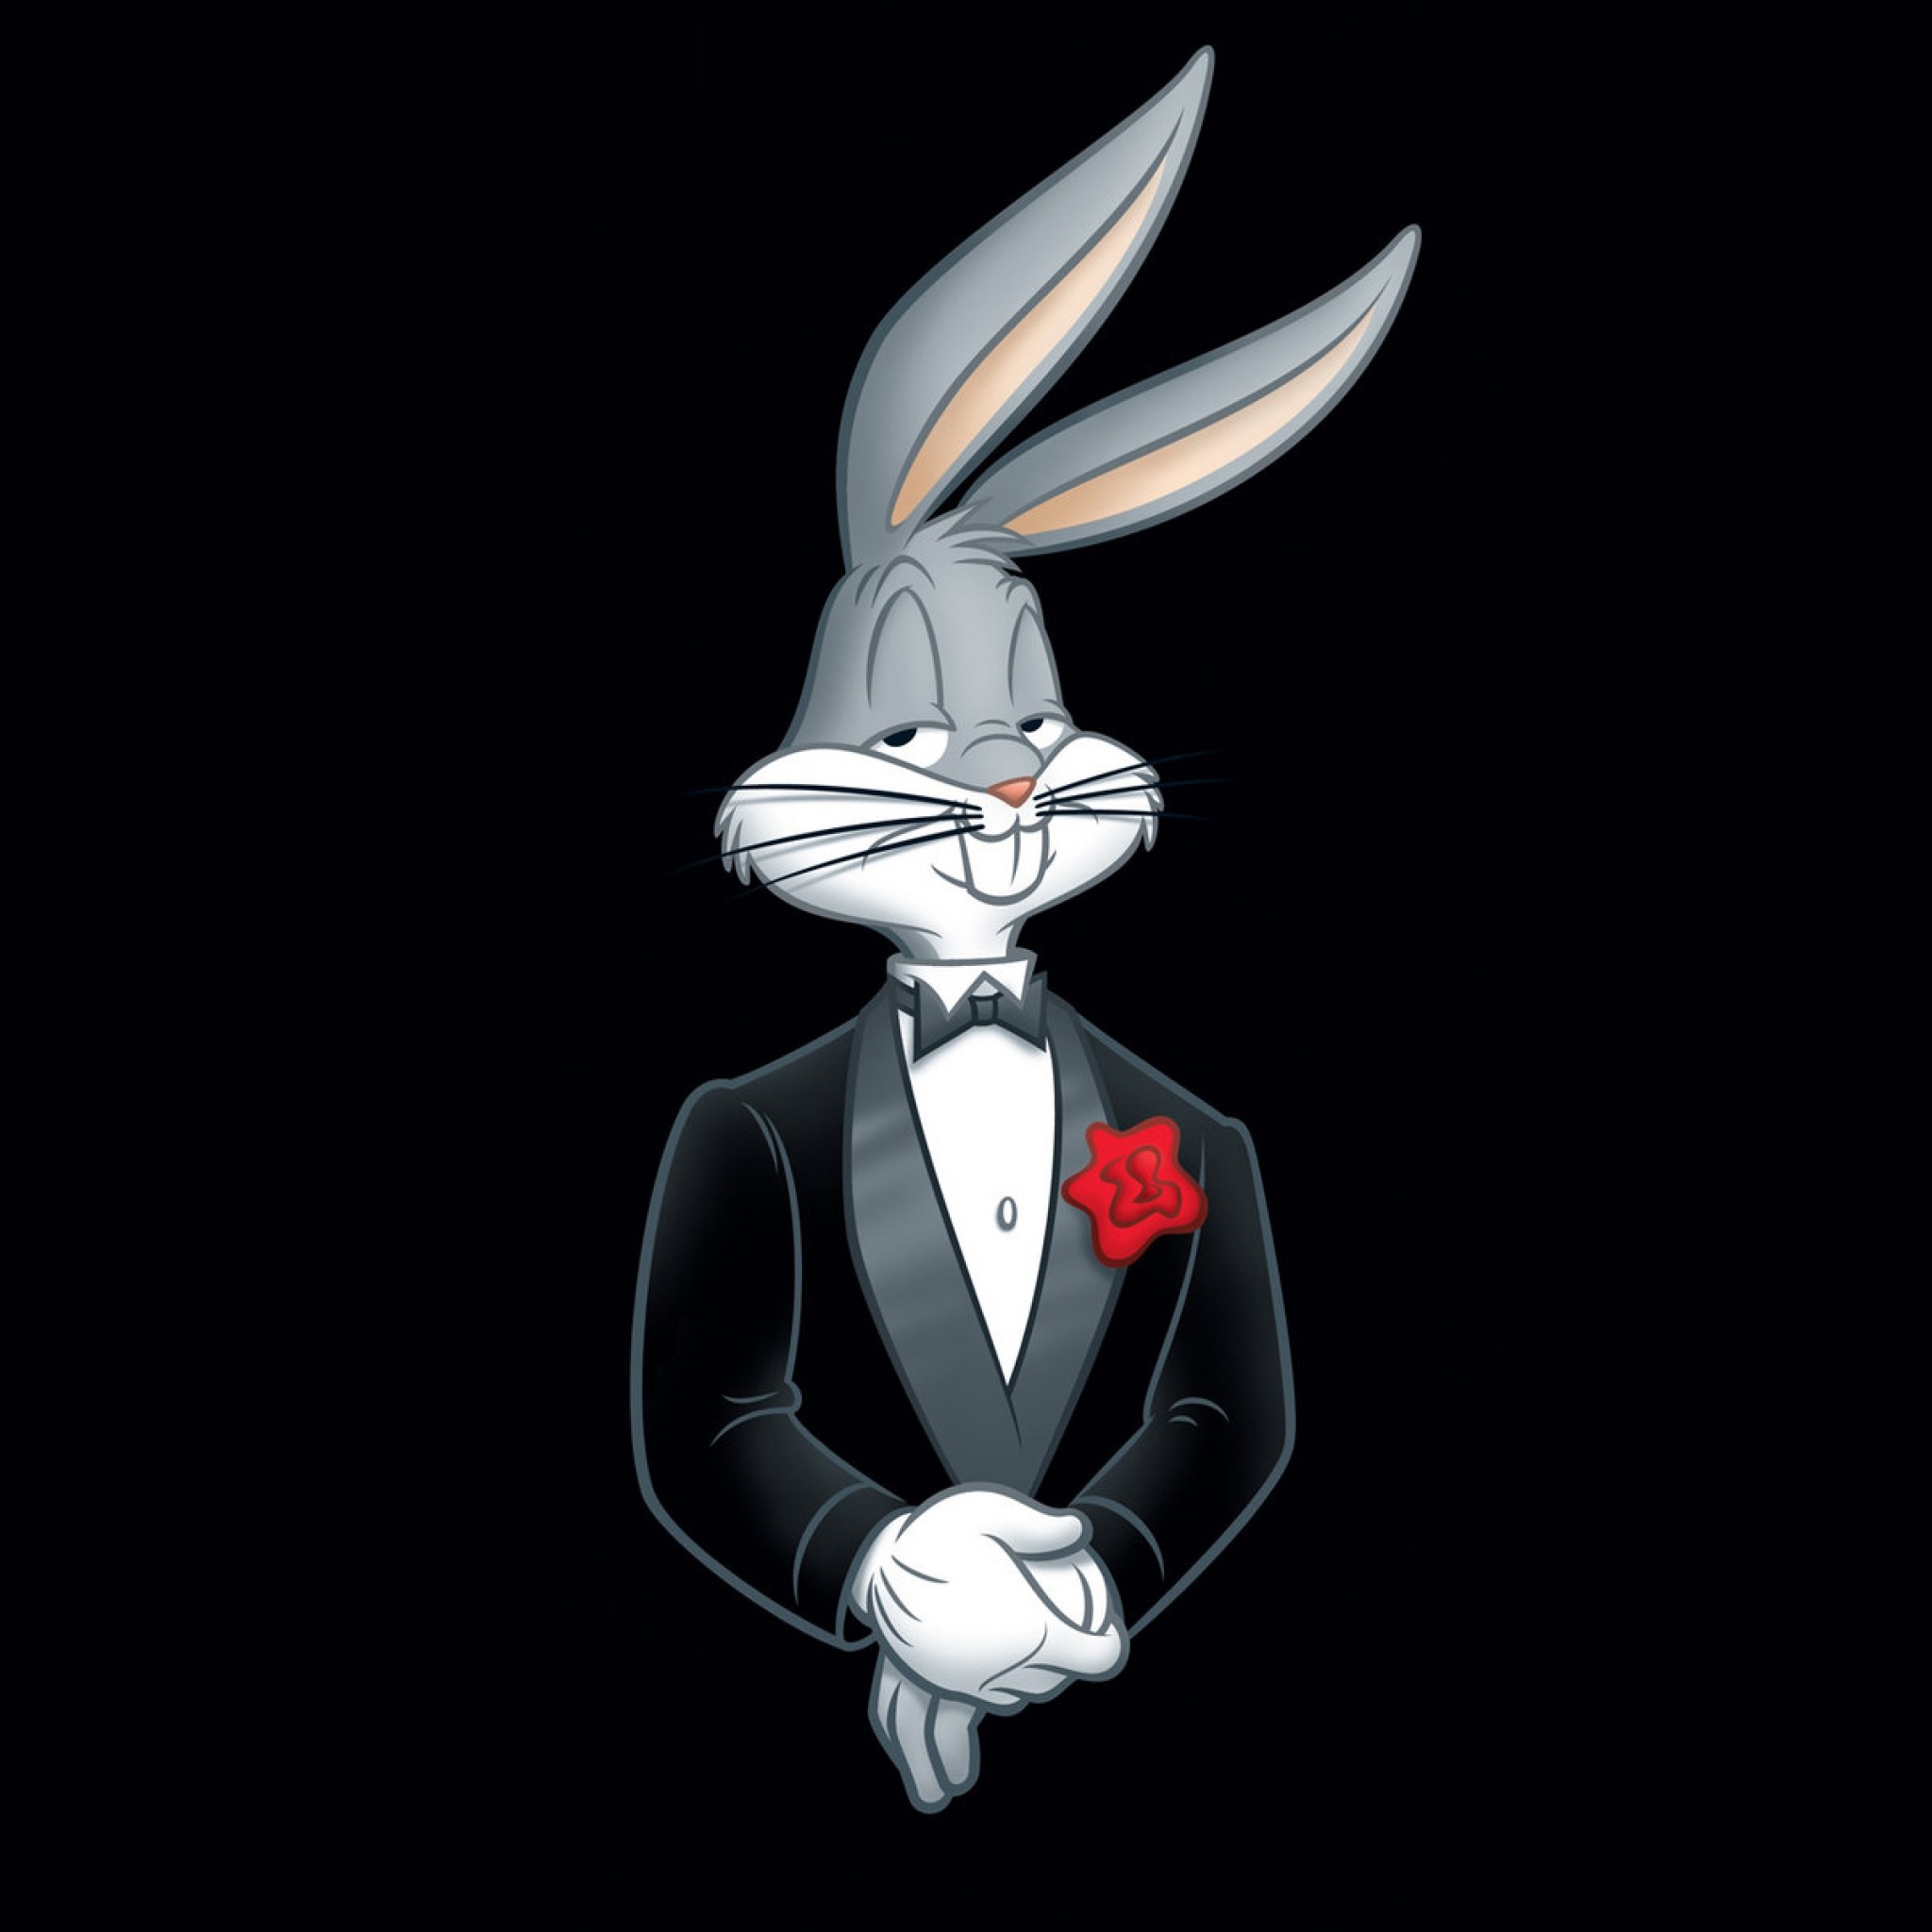 1080p Bugs Bunny Hd - HD Wallpaper 